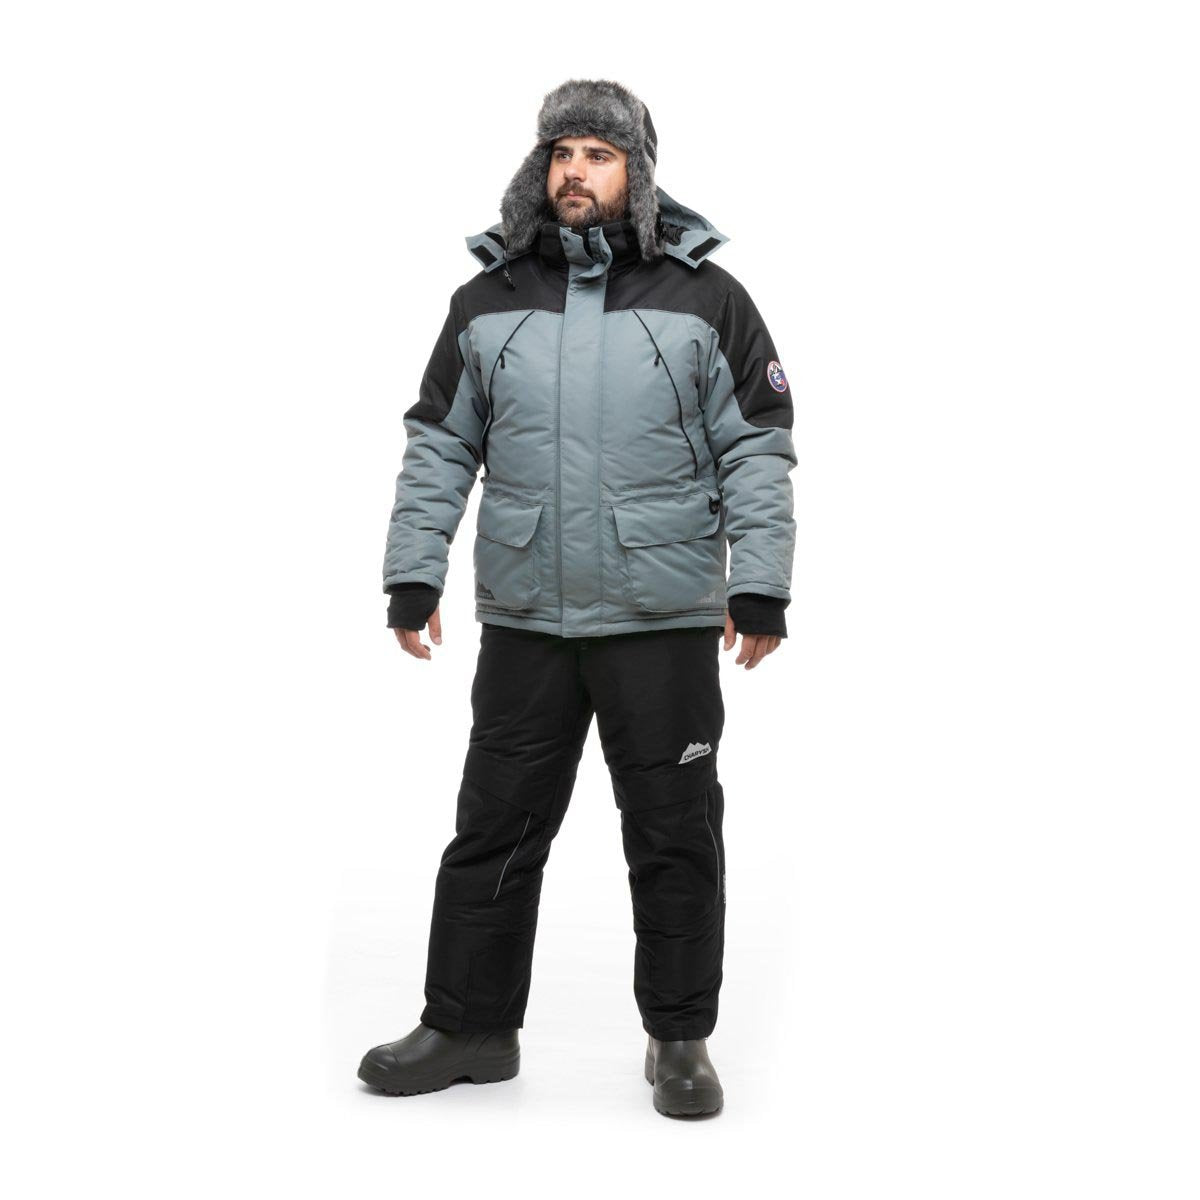 Angler Pro Windproof Winter Jacket and Bibs Set for Men, Gray